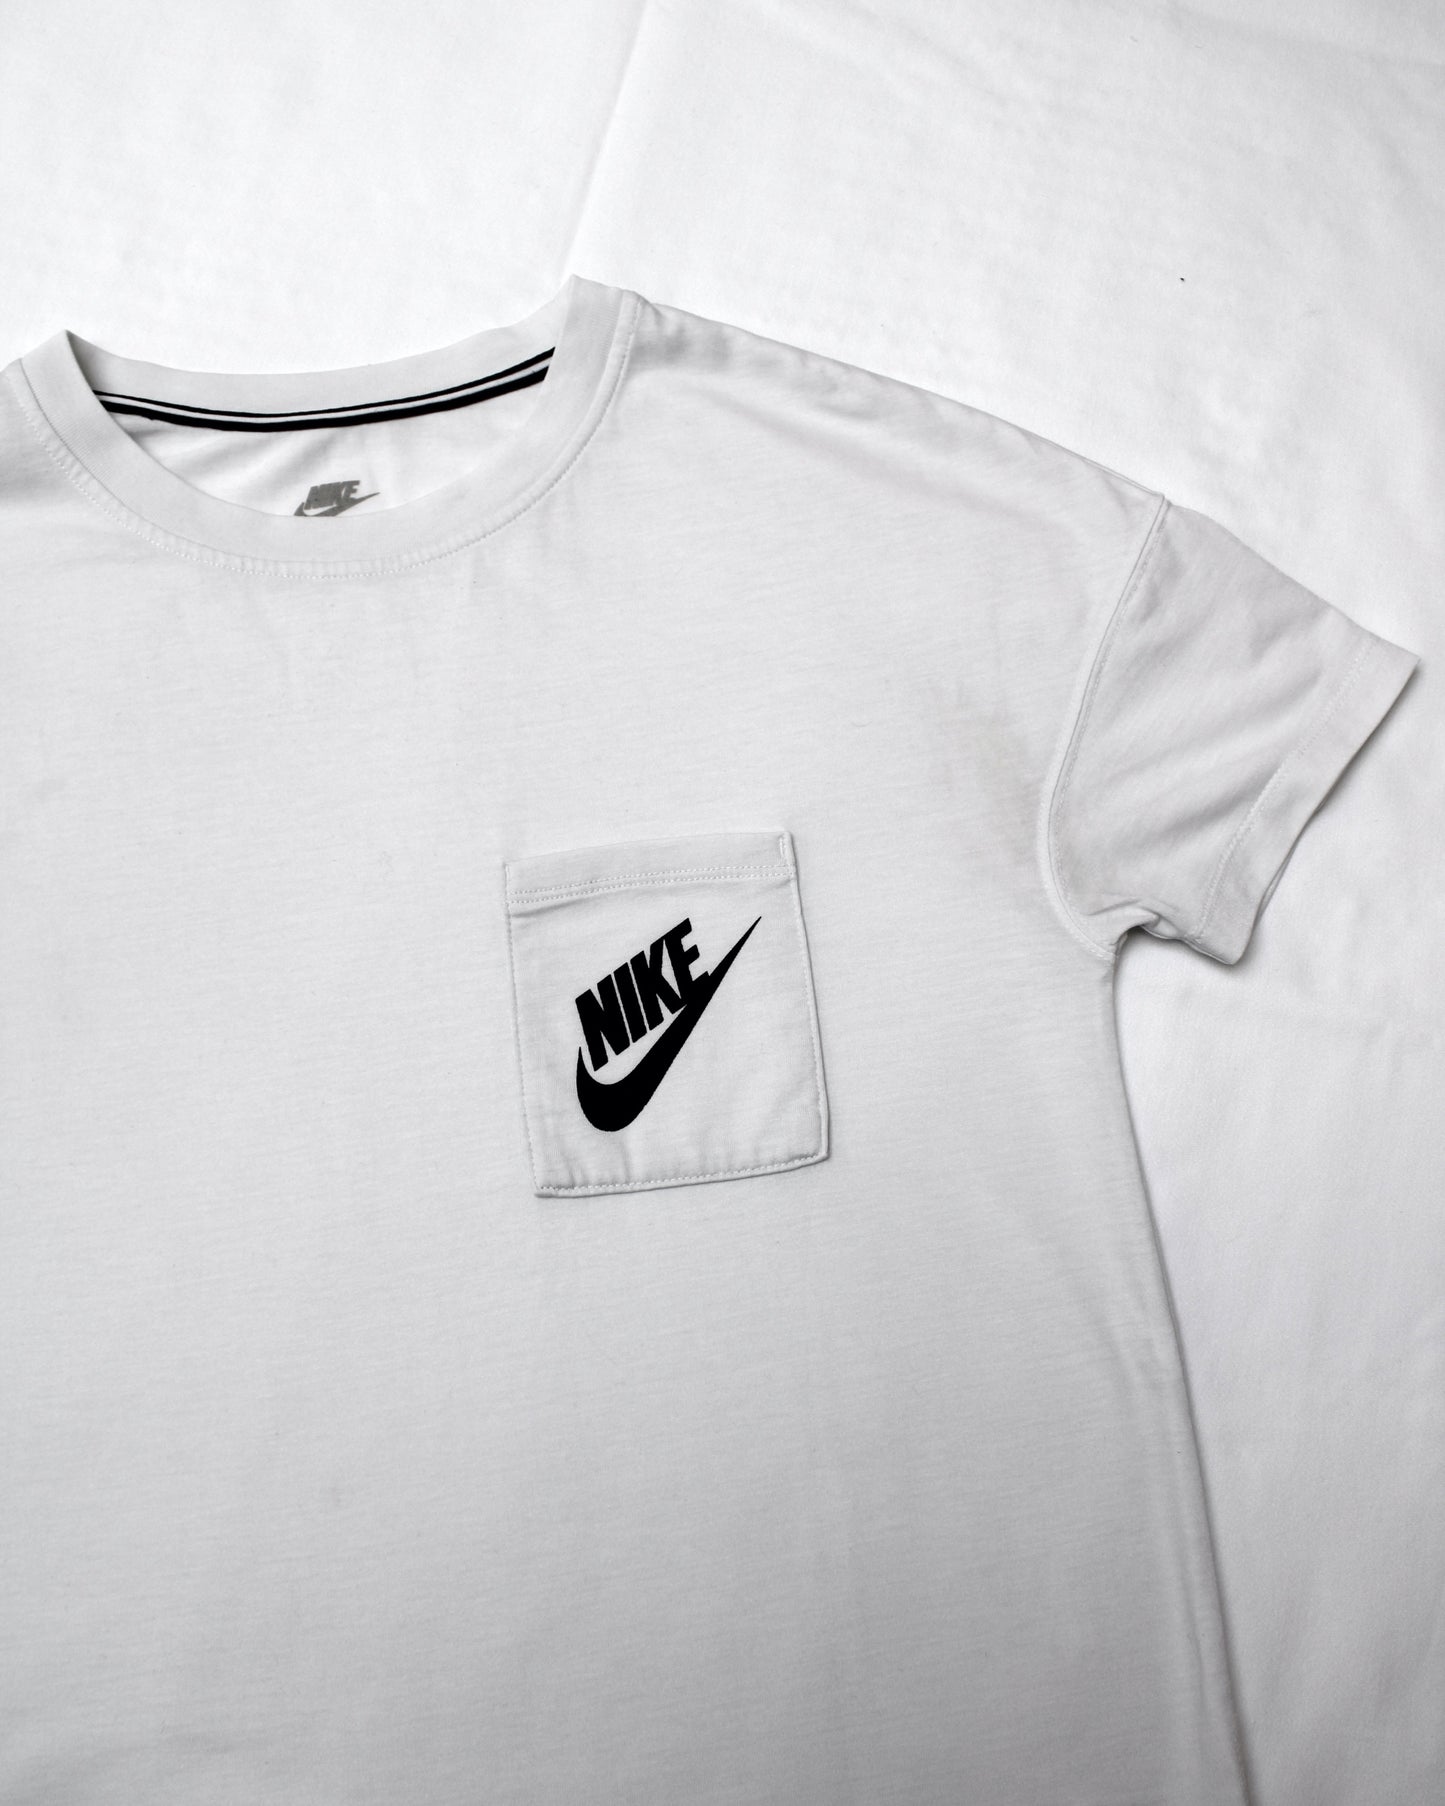 Nike White T-shirt - Repurpus Vintage